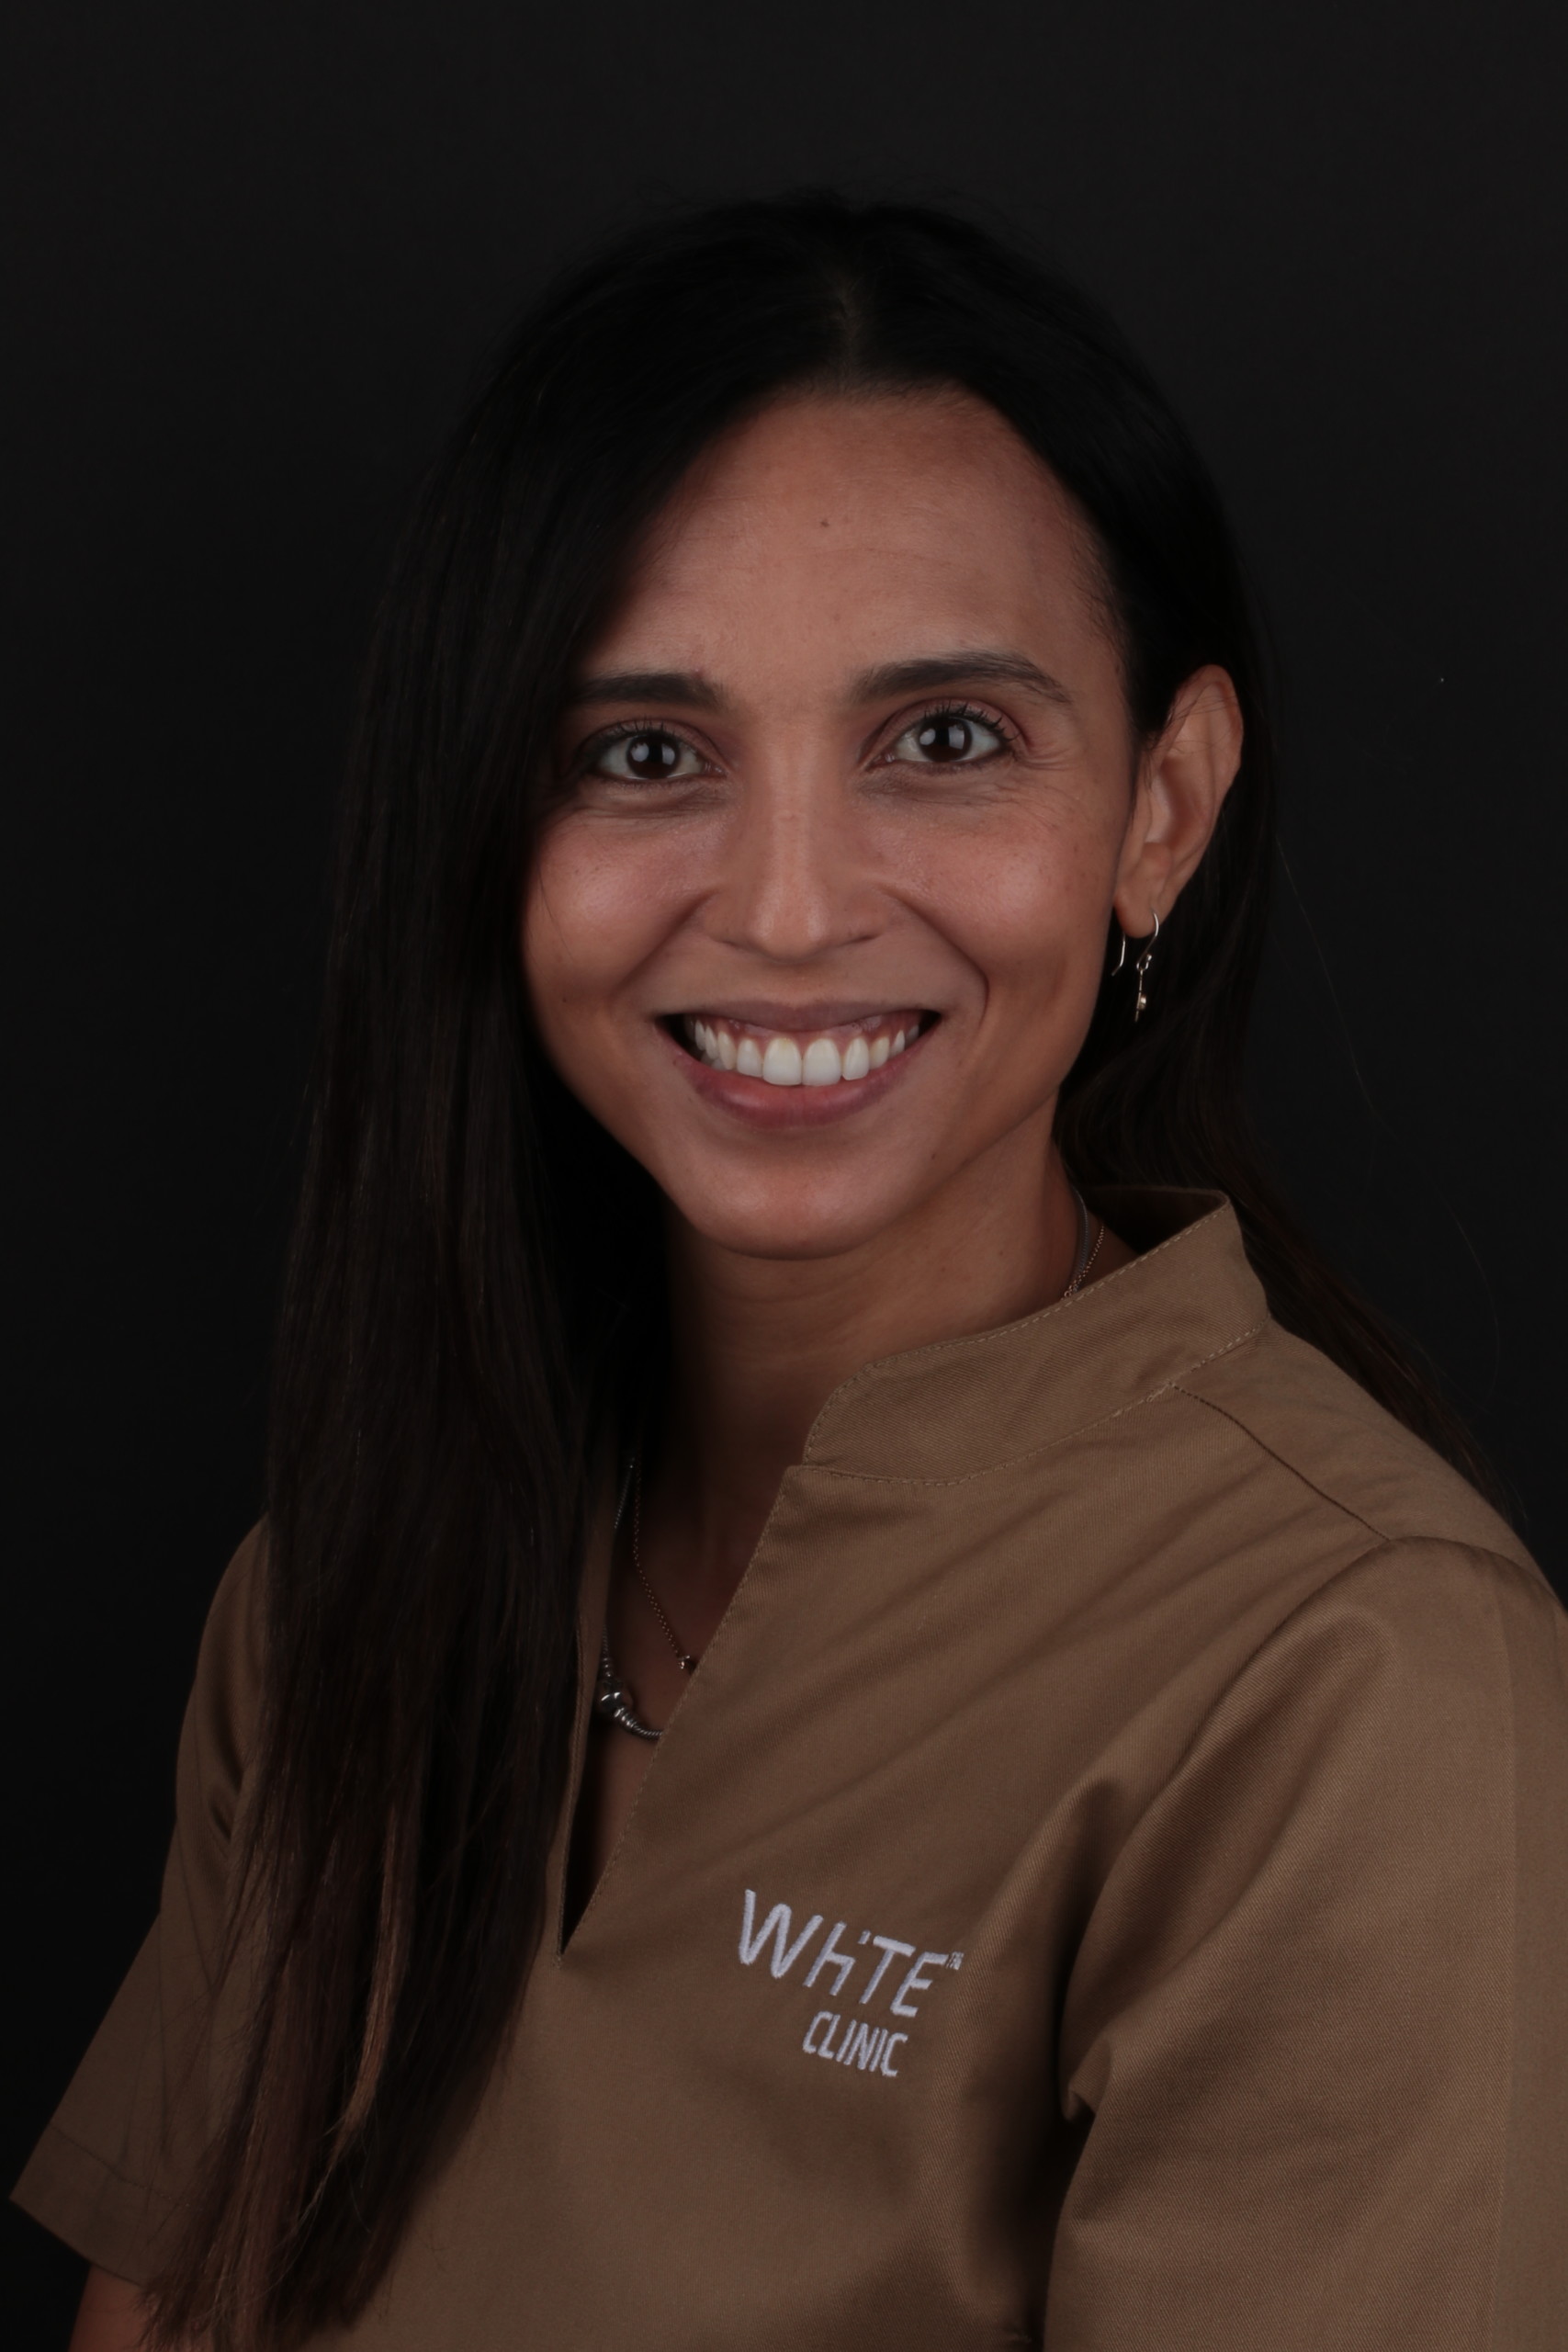 Dra. Susana Gomes - Doctor of Dental Medicine